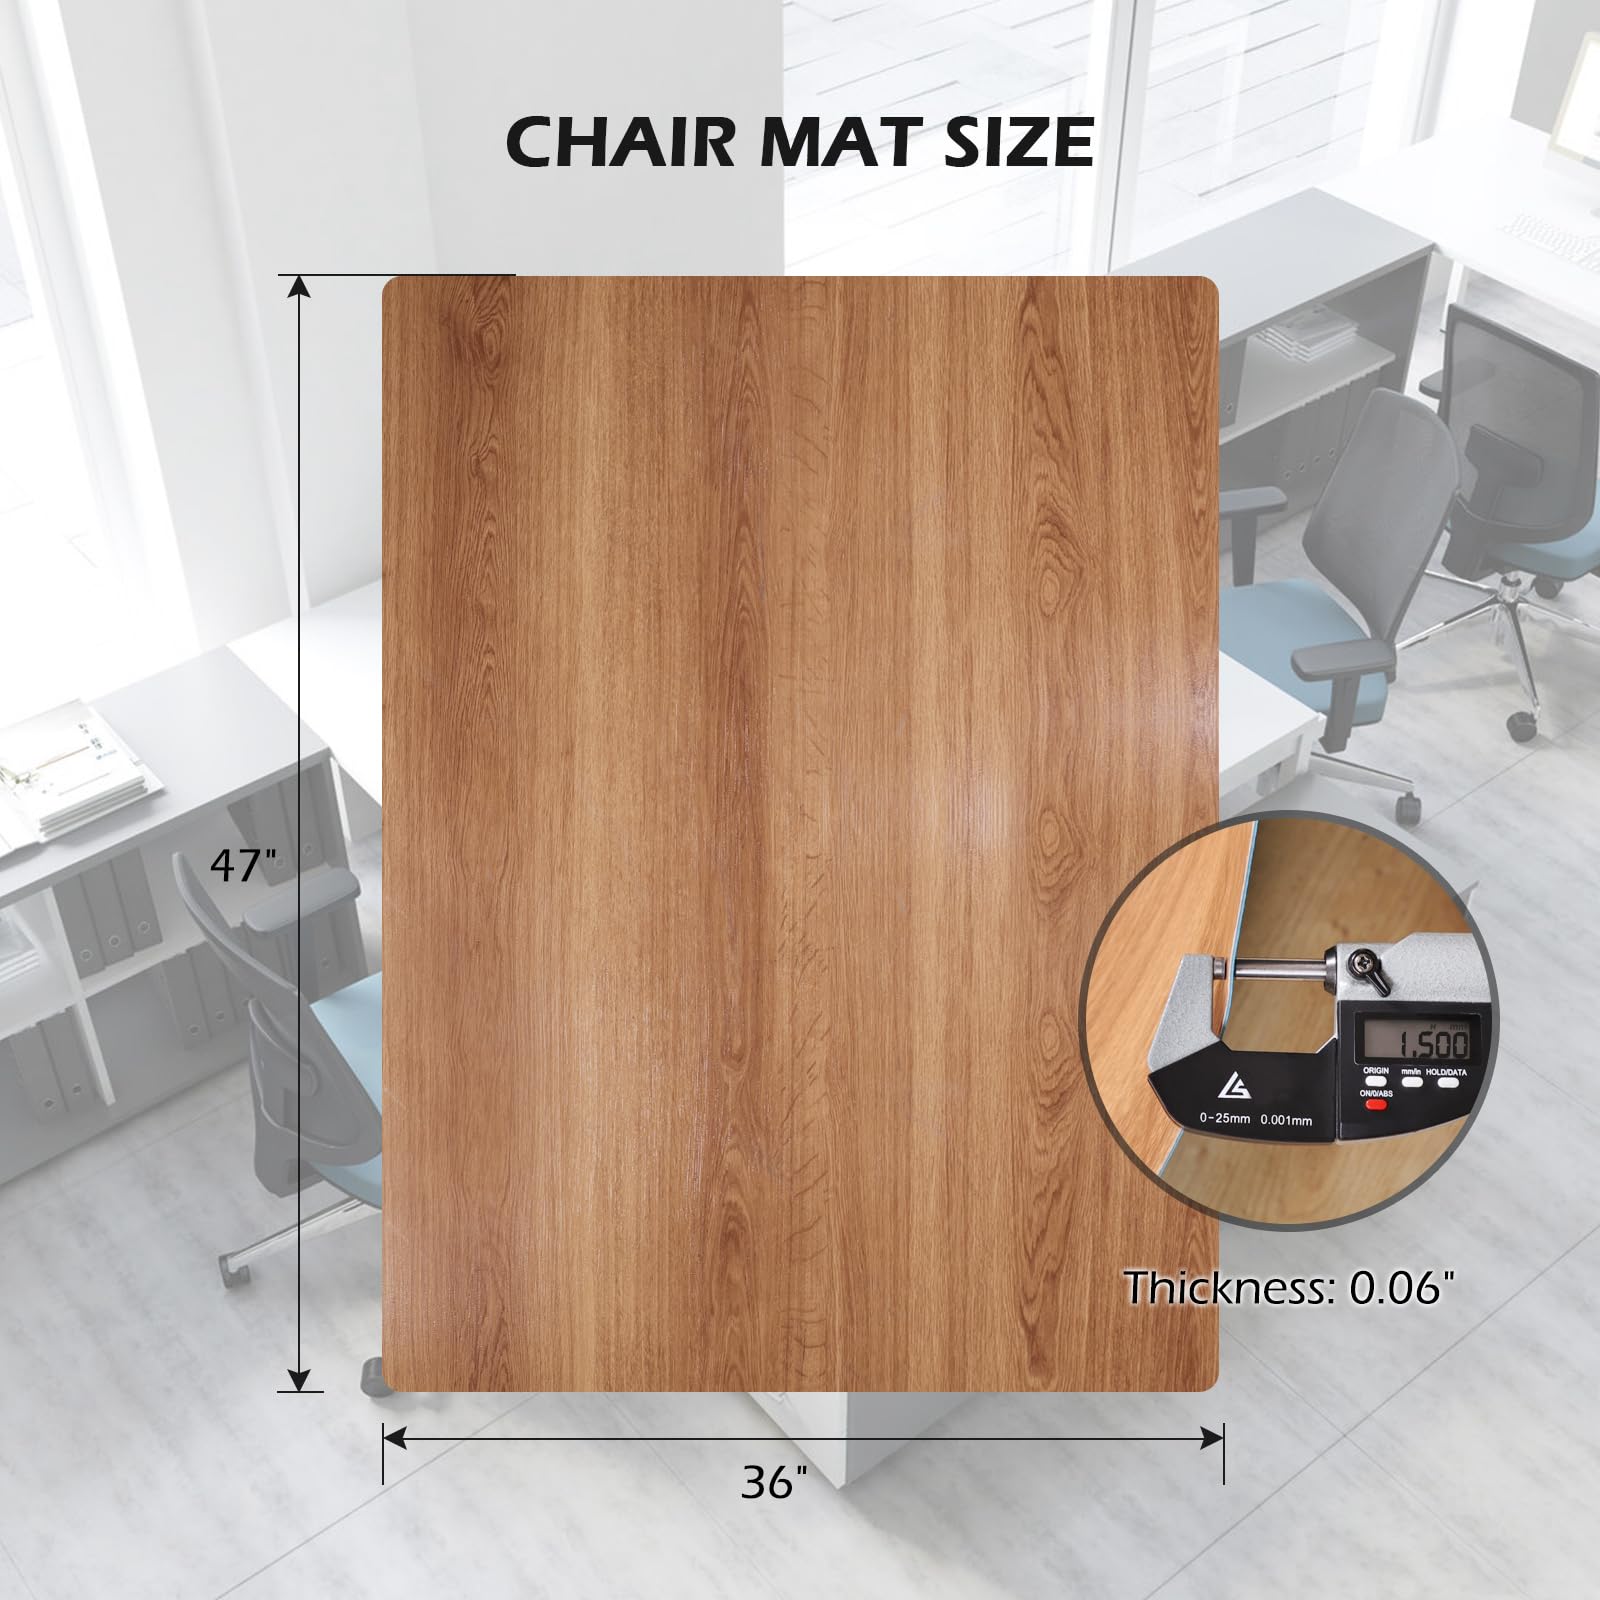 SALLOUS Chair Mat for Hard Floors, 47" x 36" Vinyl Office Chair Mat for Hardwood, Slip-Resistant Floor Protector Desk Chair Mat for Home Office, Gaming Chair Mat for Hard Surface (Black)